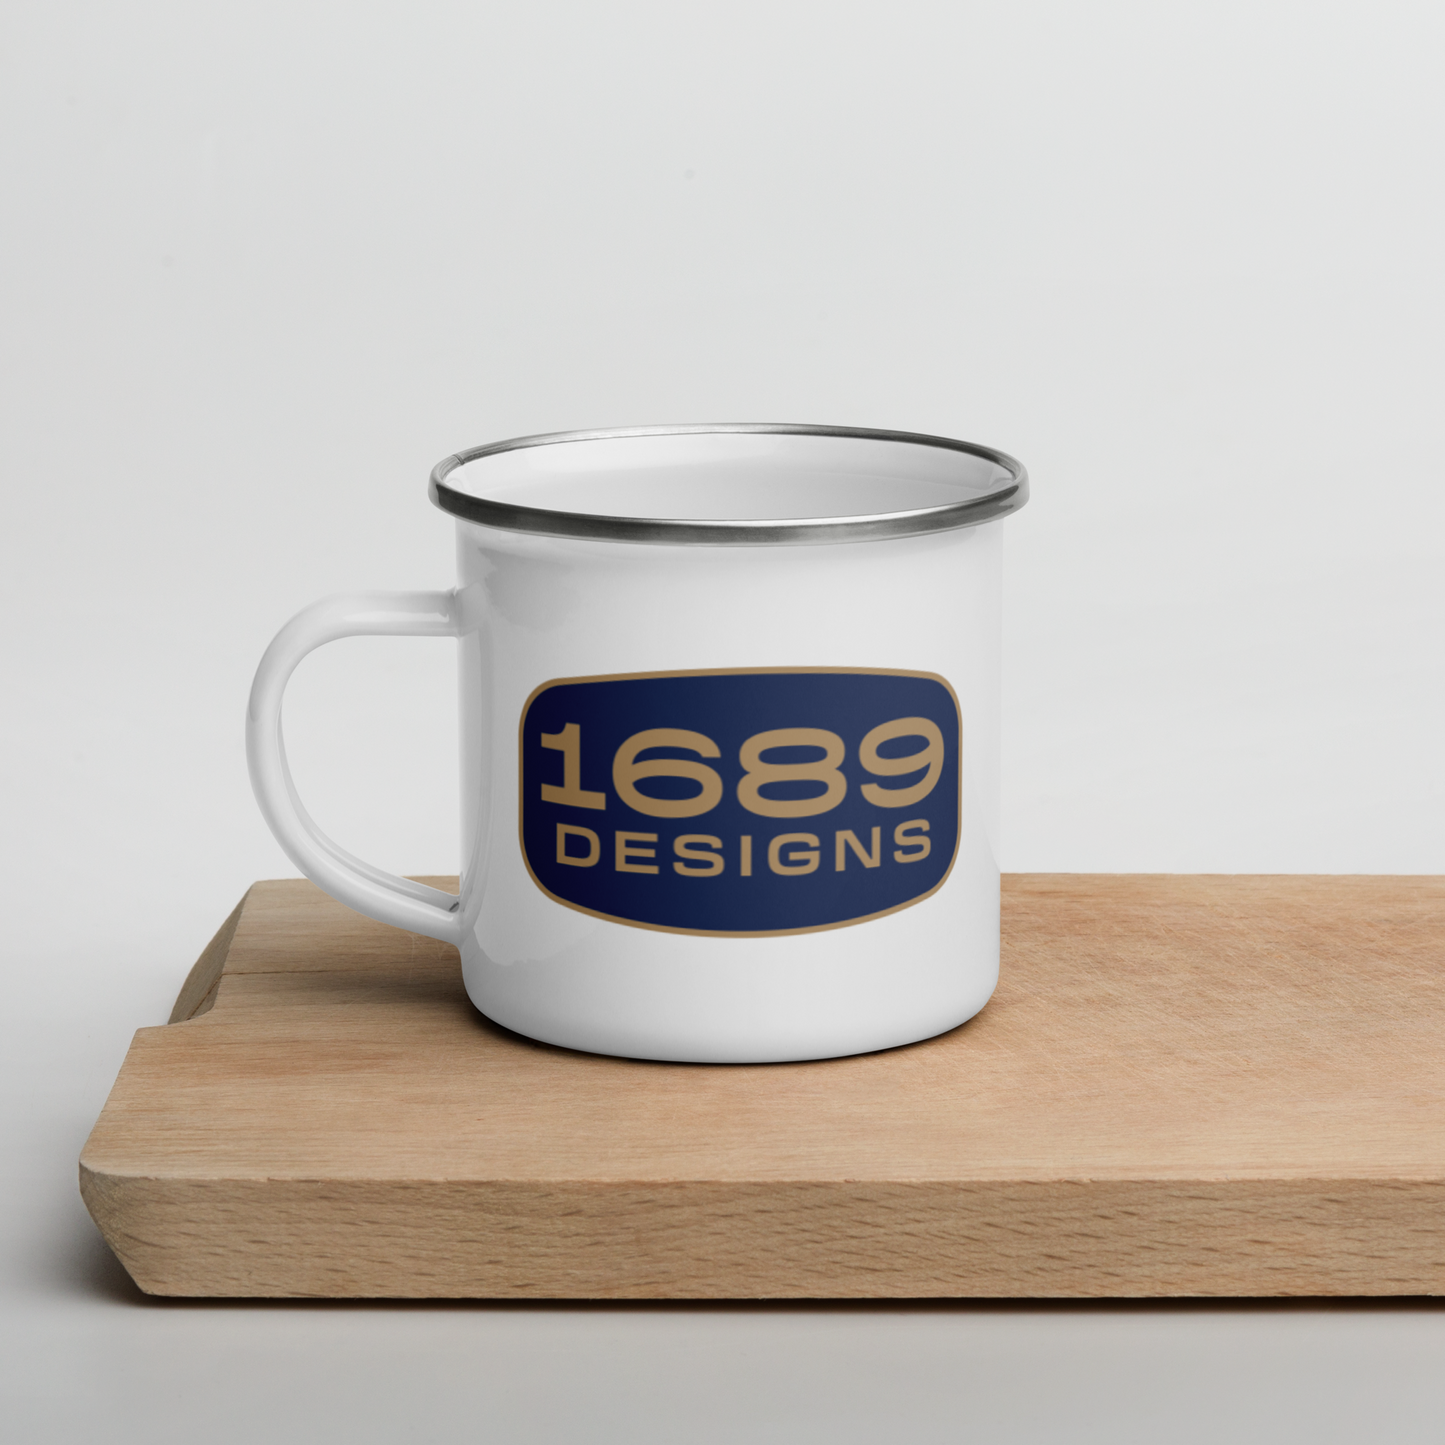 1689 Designs 12oz Enamel Mug